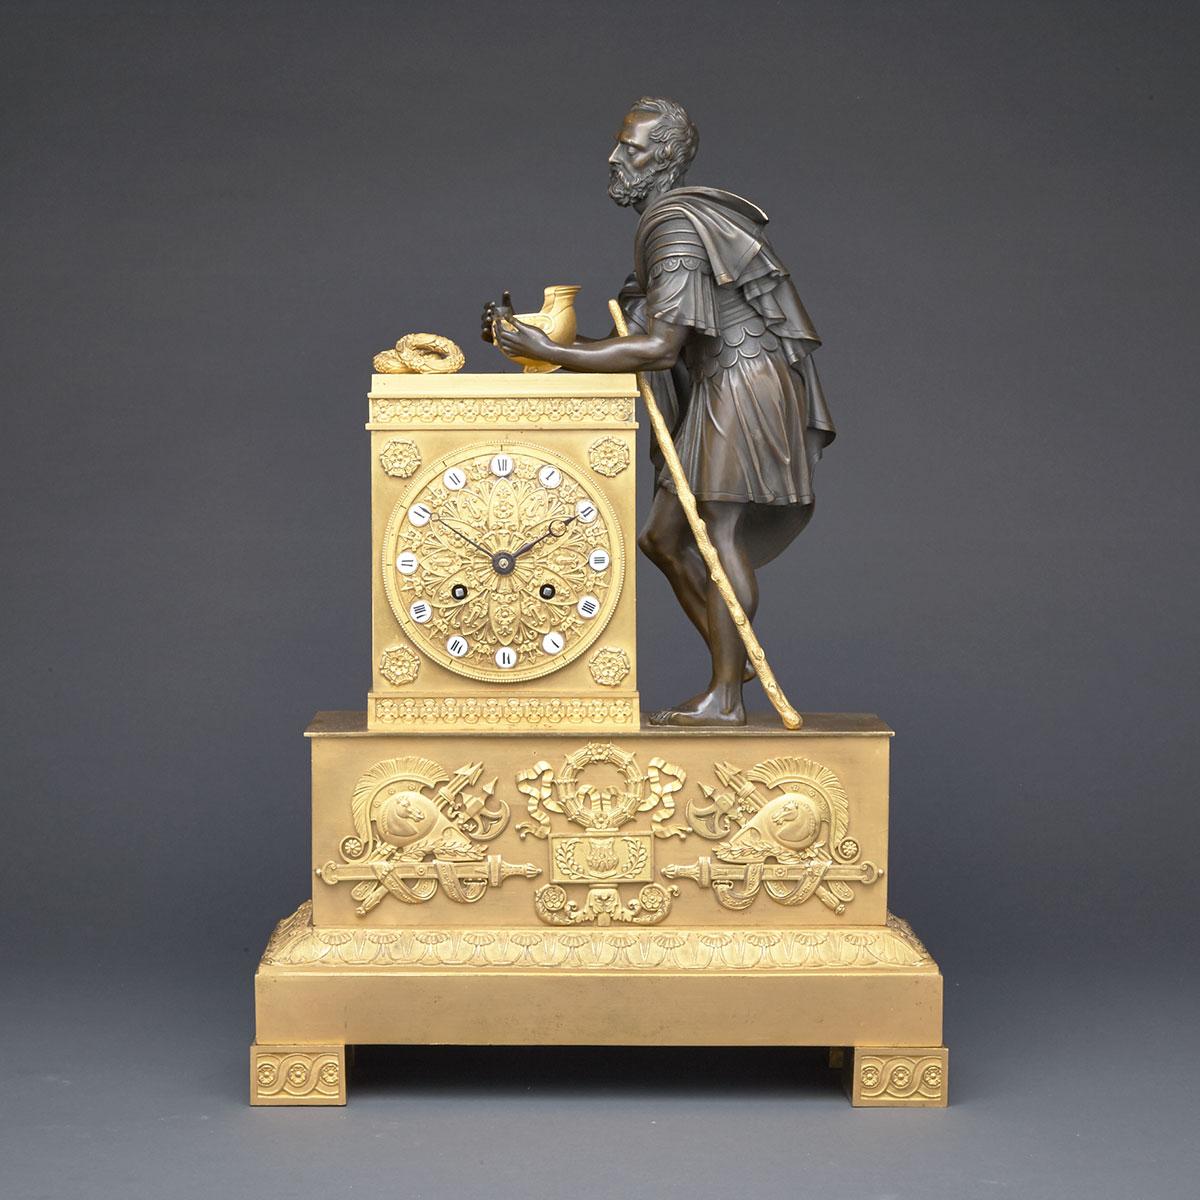 French Empire Gilt Bronze Figural Mantle Clock by Leroy, Paris, c.1810